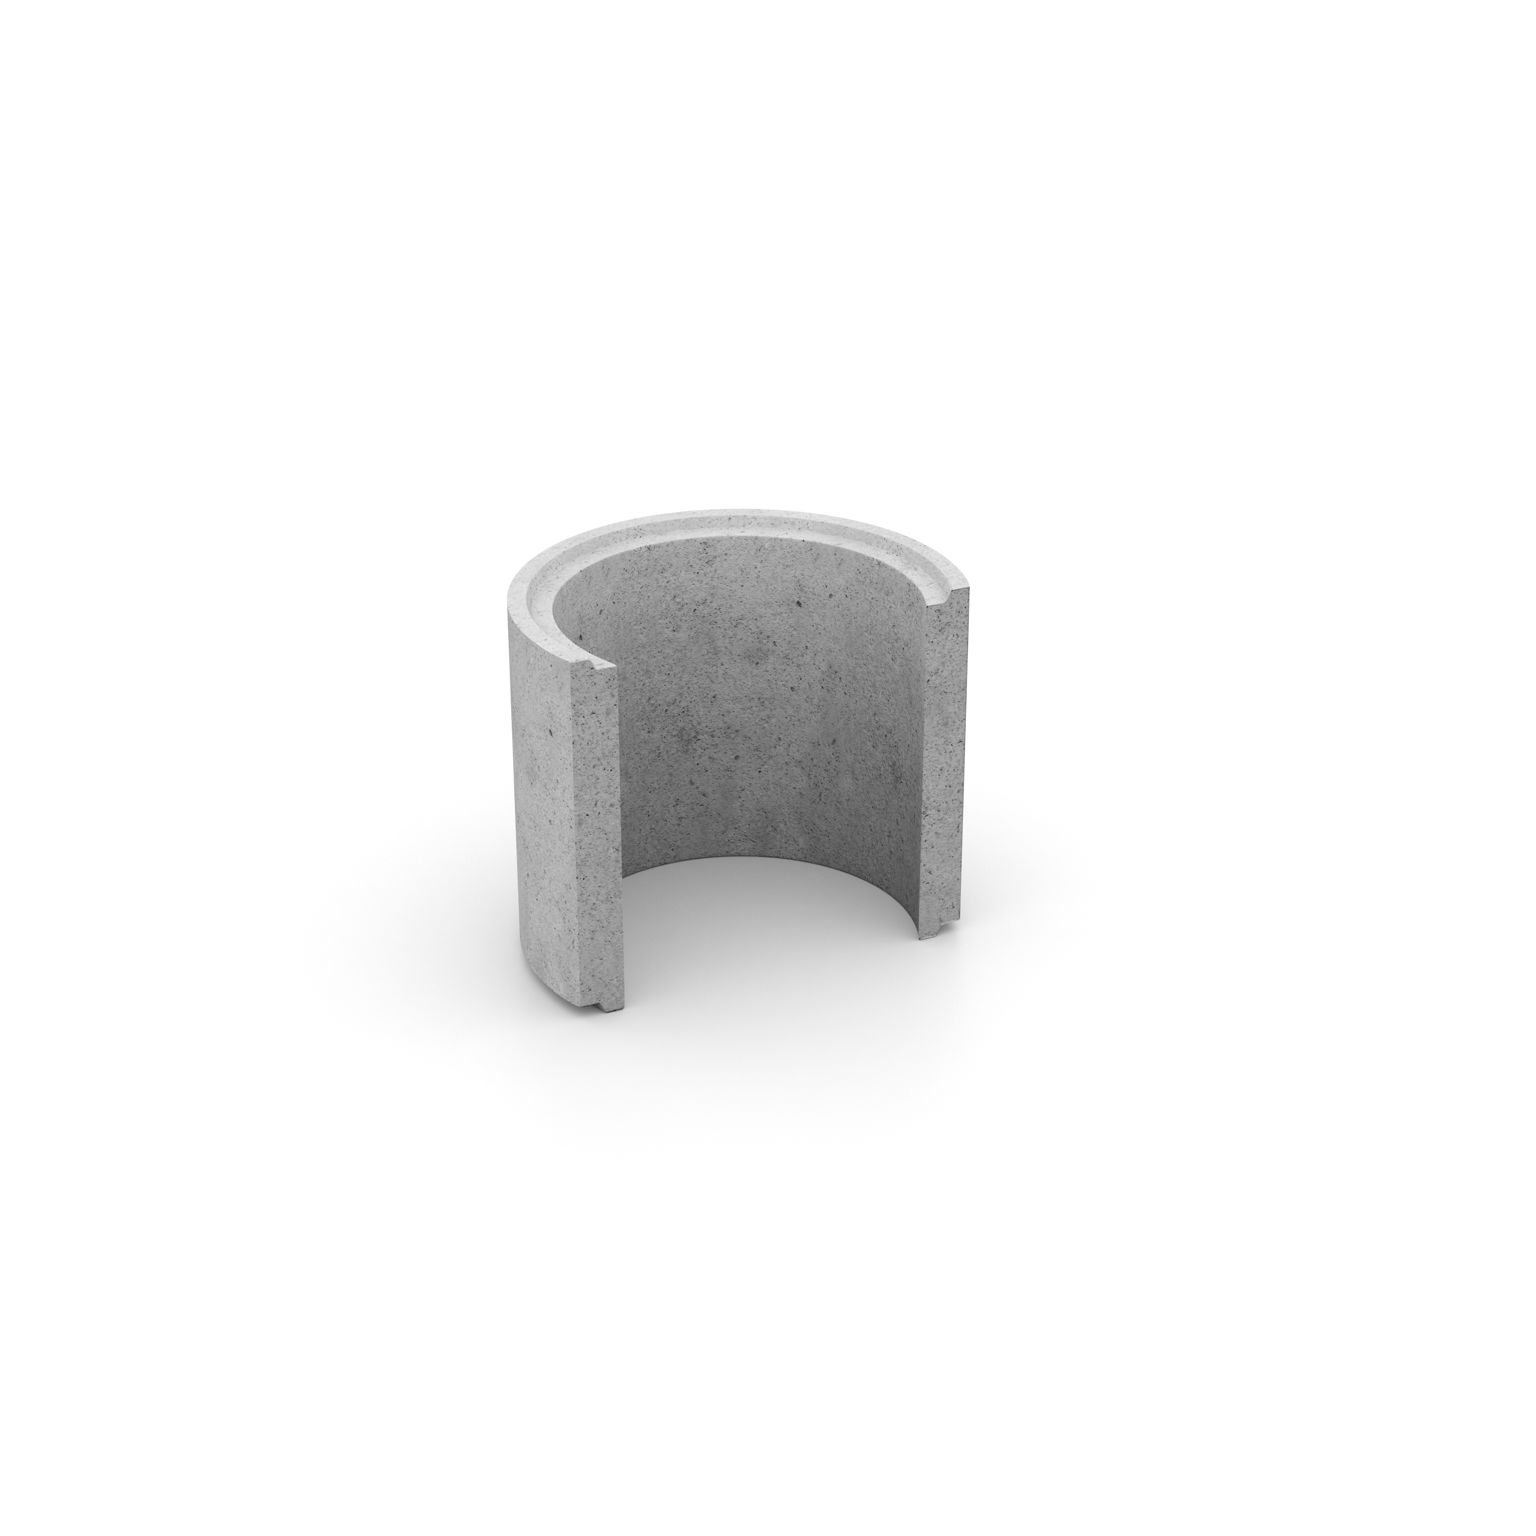 Produktbild av en cementfogad delad brunnsring;som slingbrunn i formatet: 600x600 mm